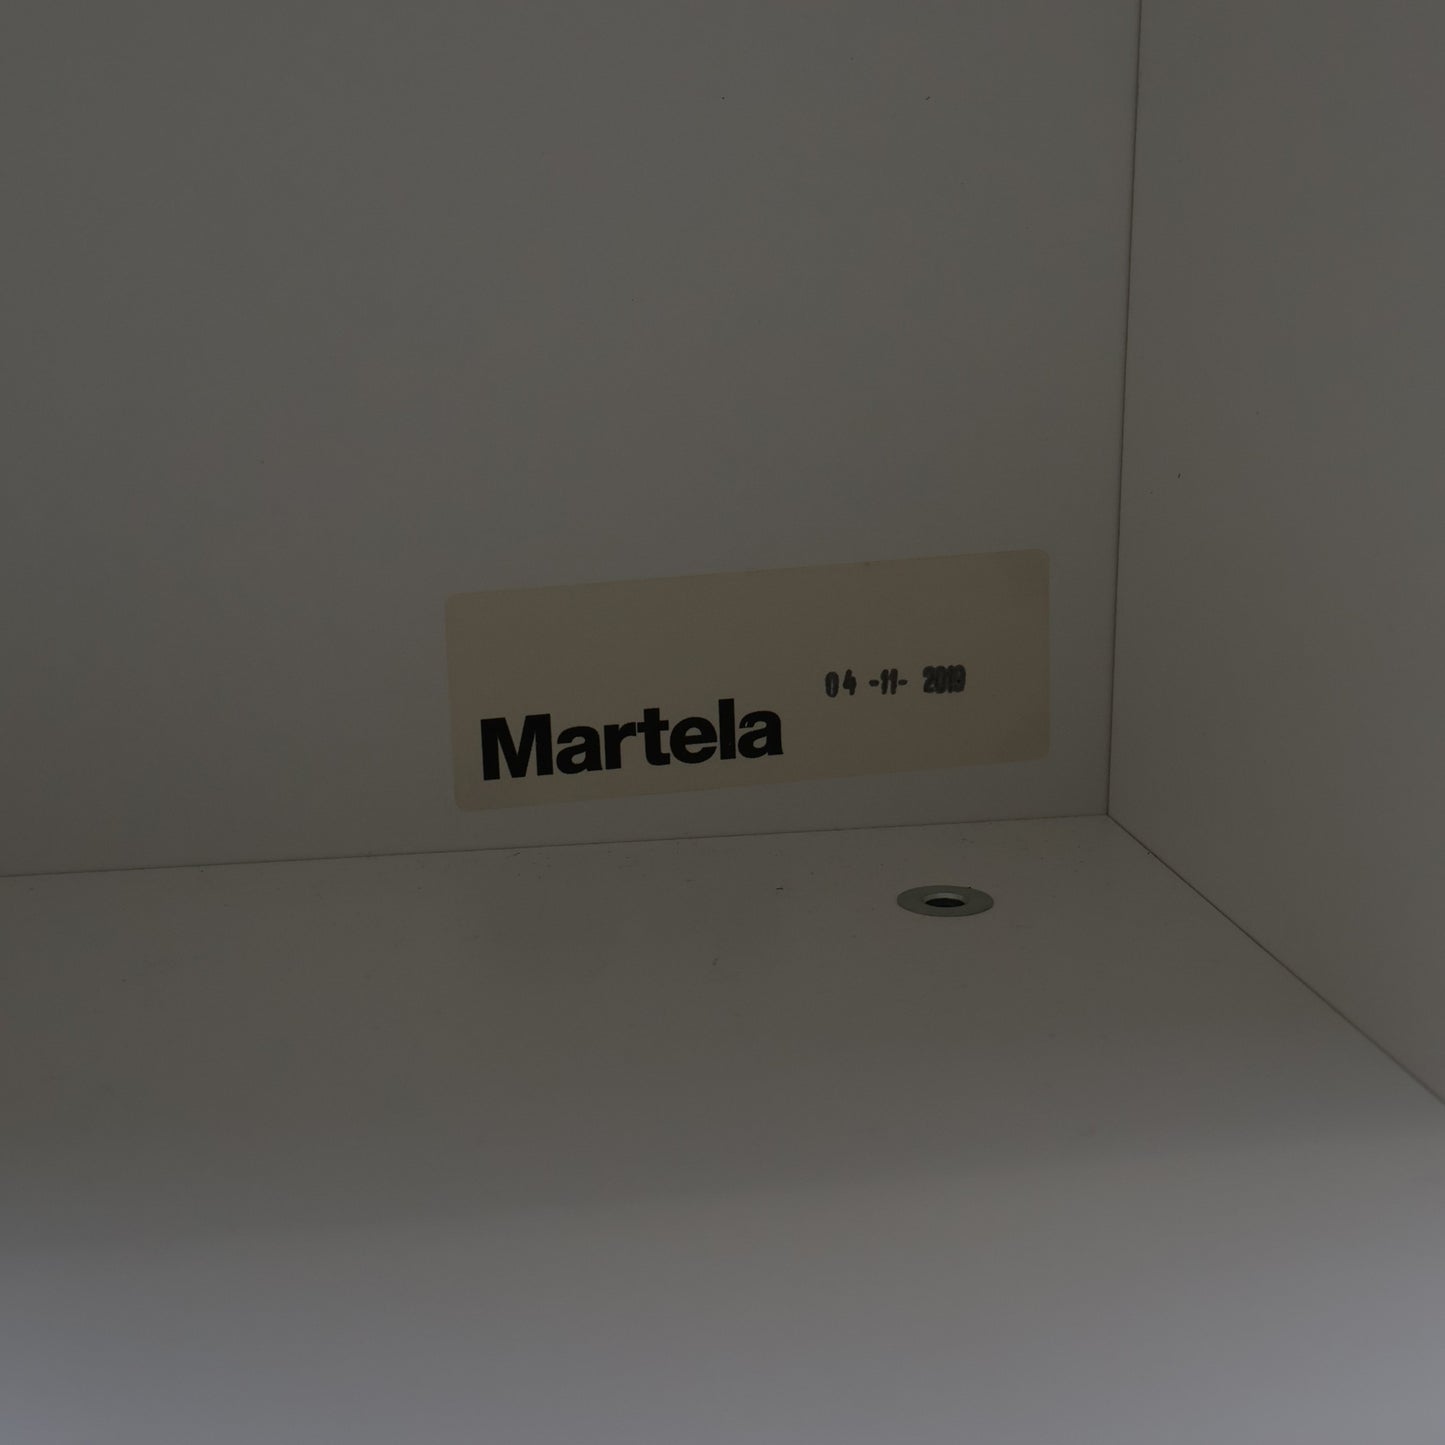 Kvalitetssikret | Martela - The Wall